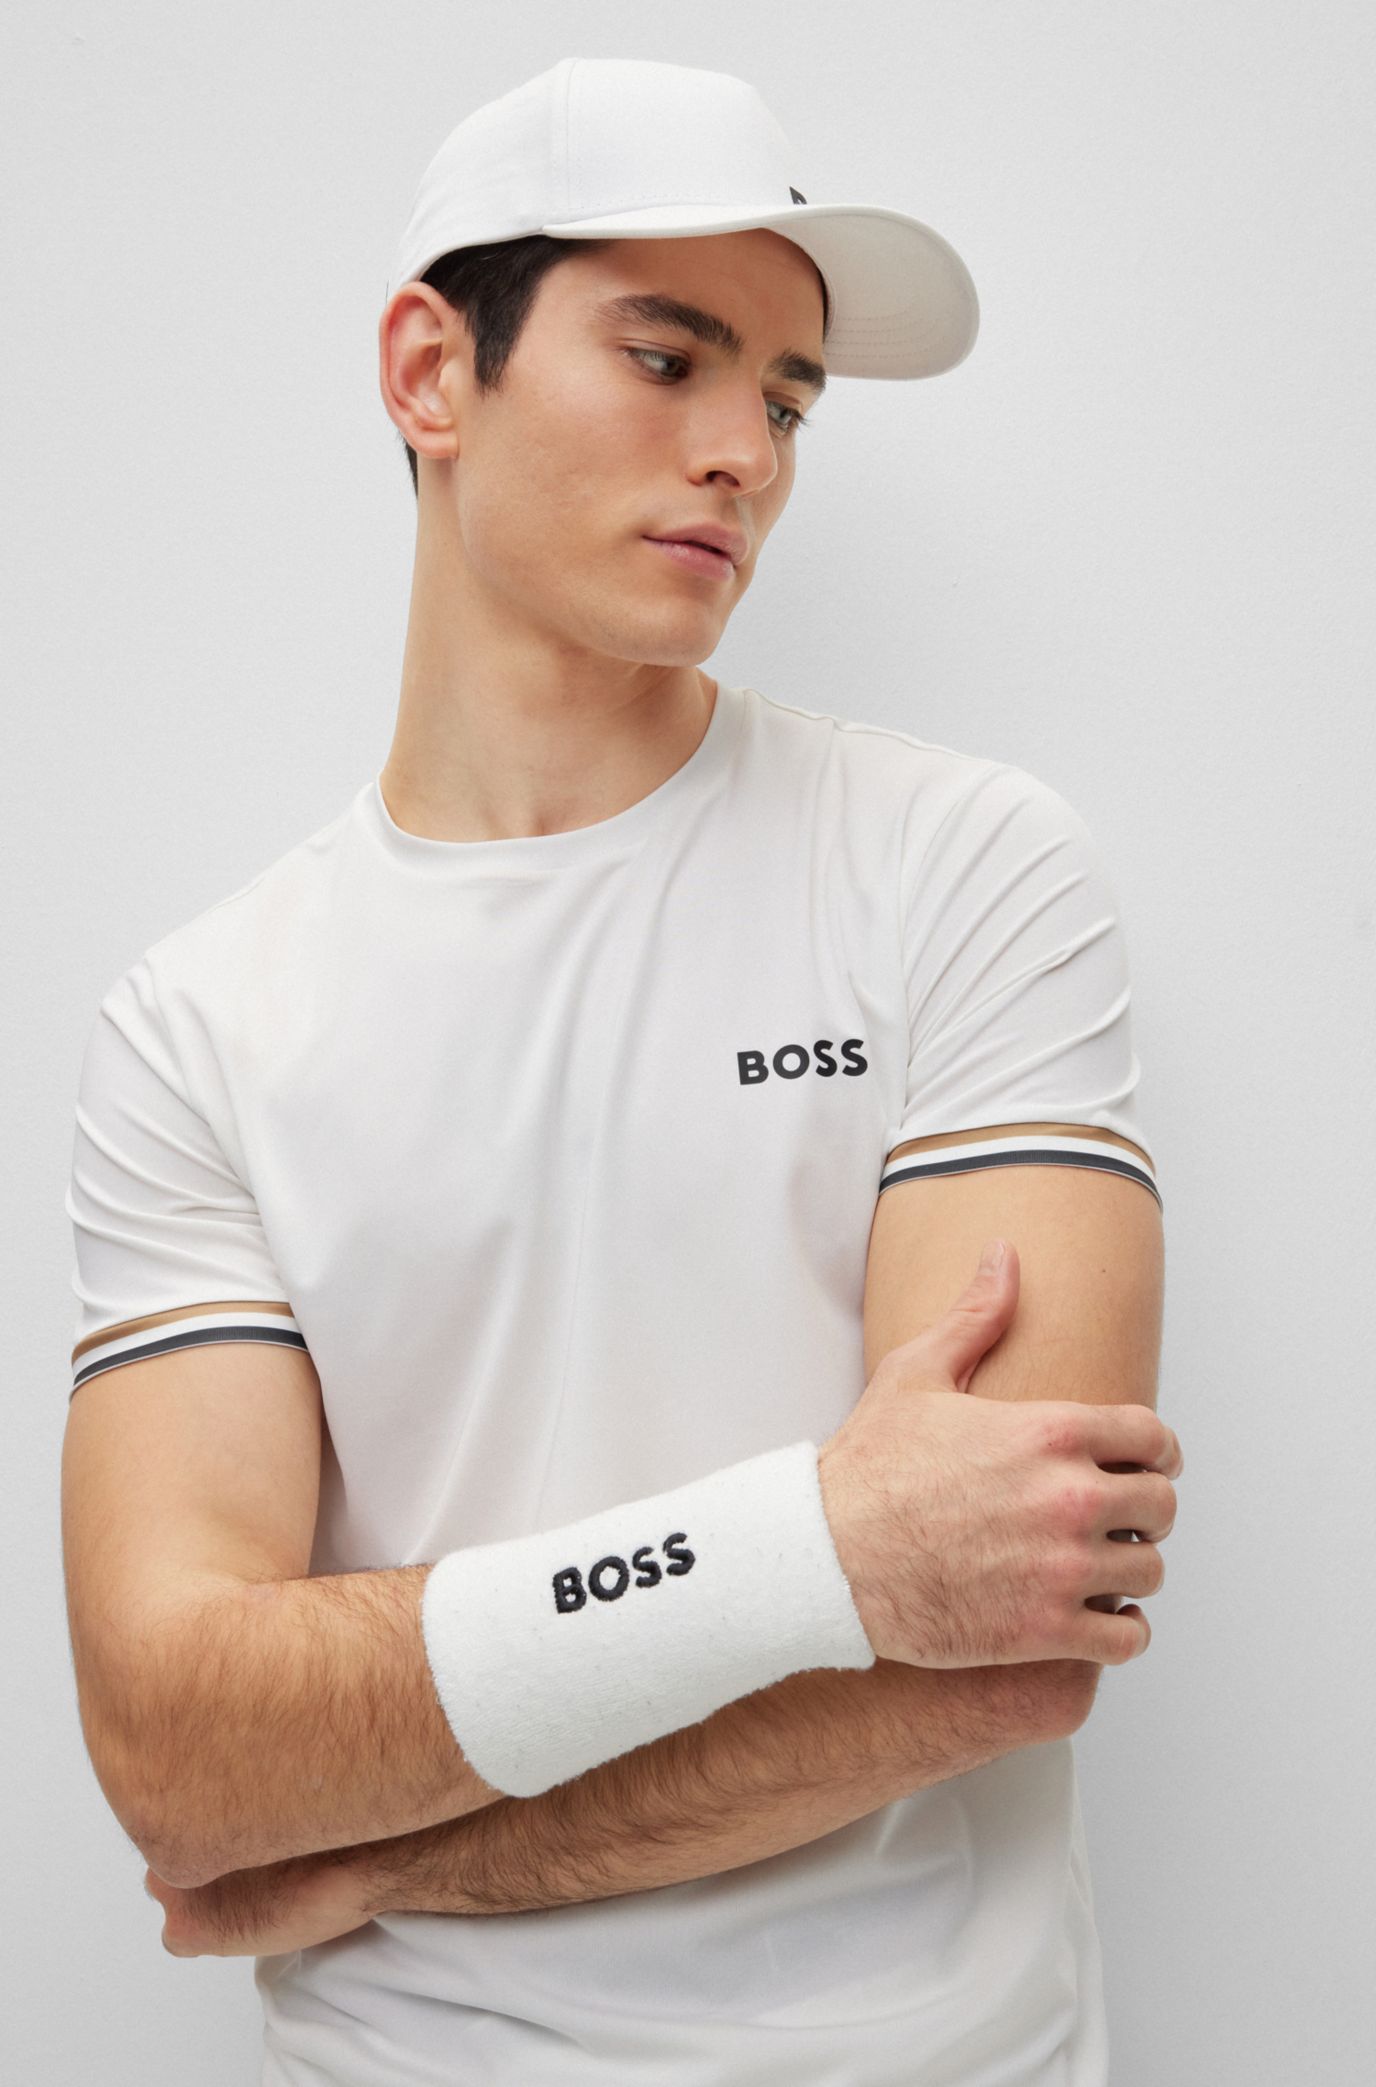 Matteo BOSS stripes logo crew-neck Berrettini T-shirt BOSS - signature with x